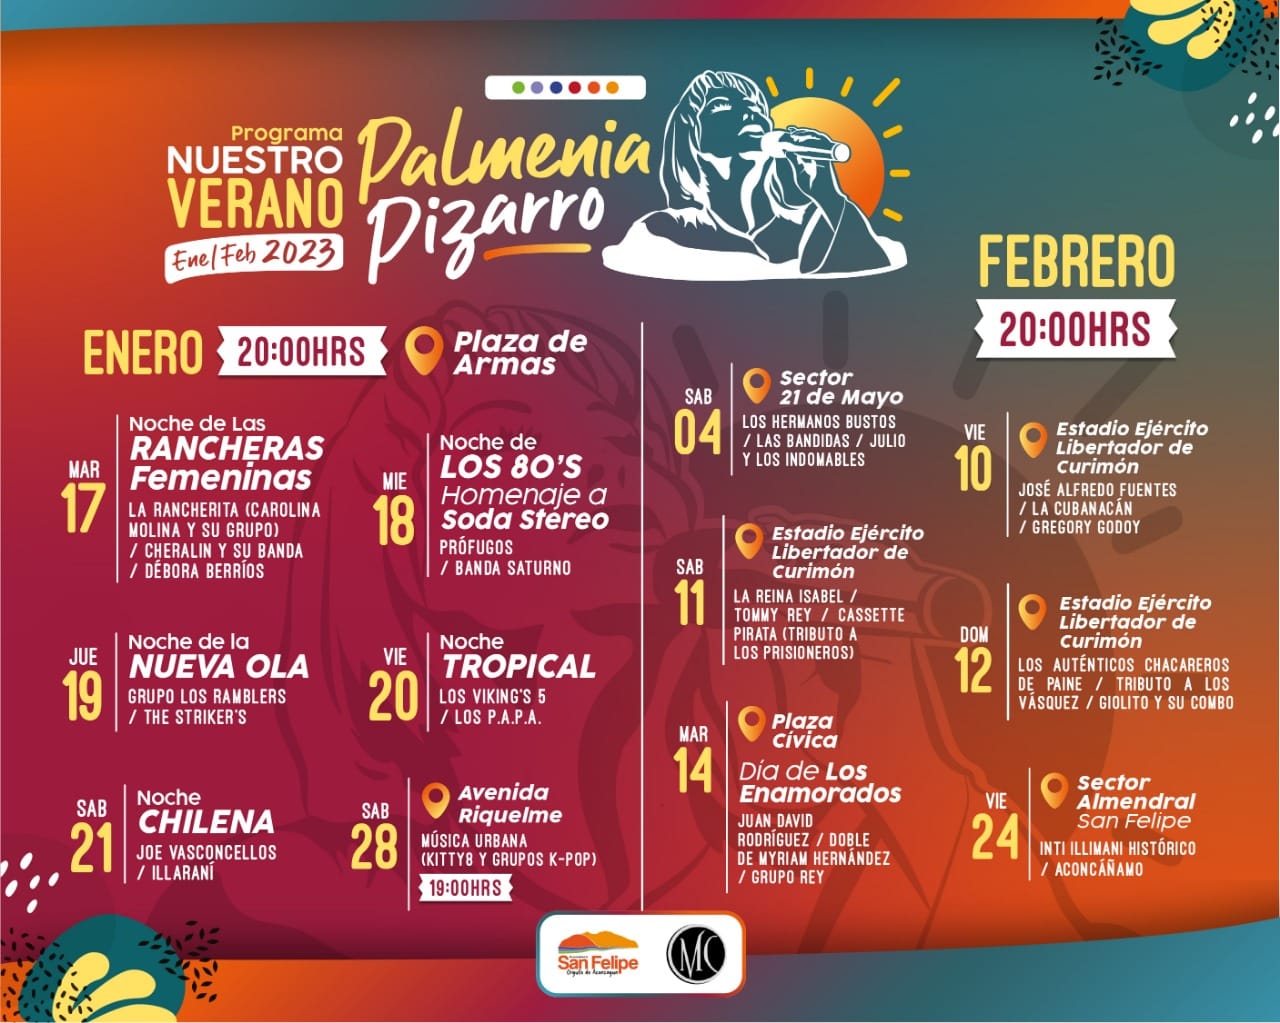 Joe Vasconcellos y Los Viking 5 el programa de Verano Palmenia Pizarro 2023 en San Felipe